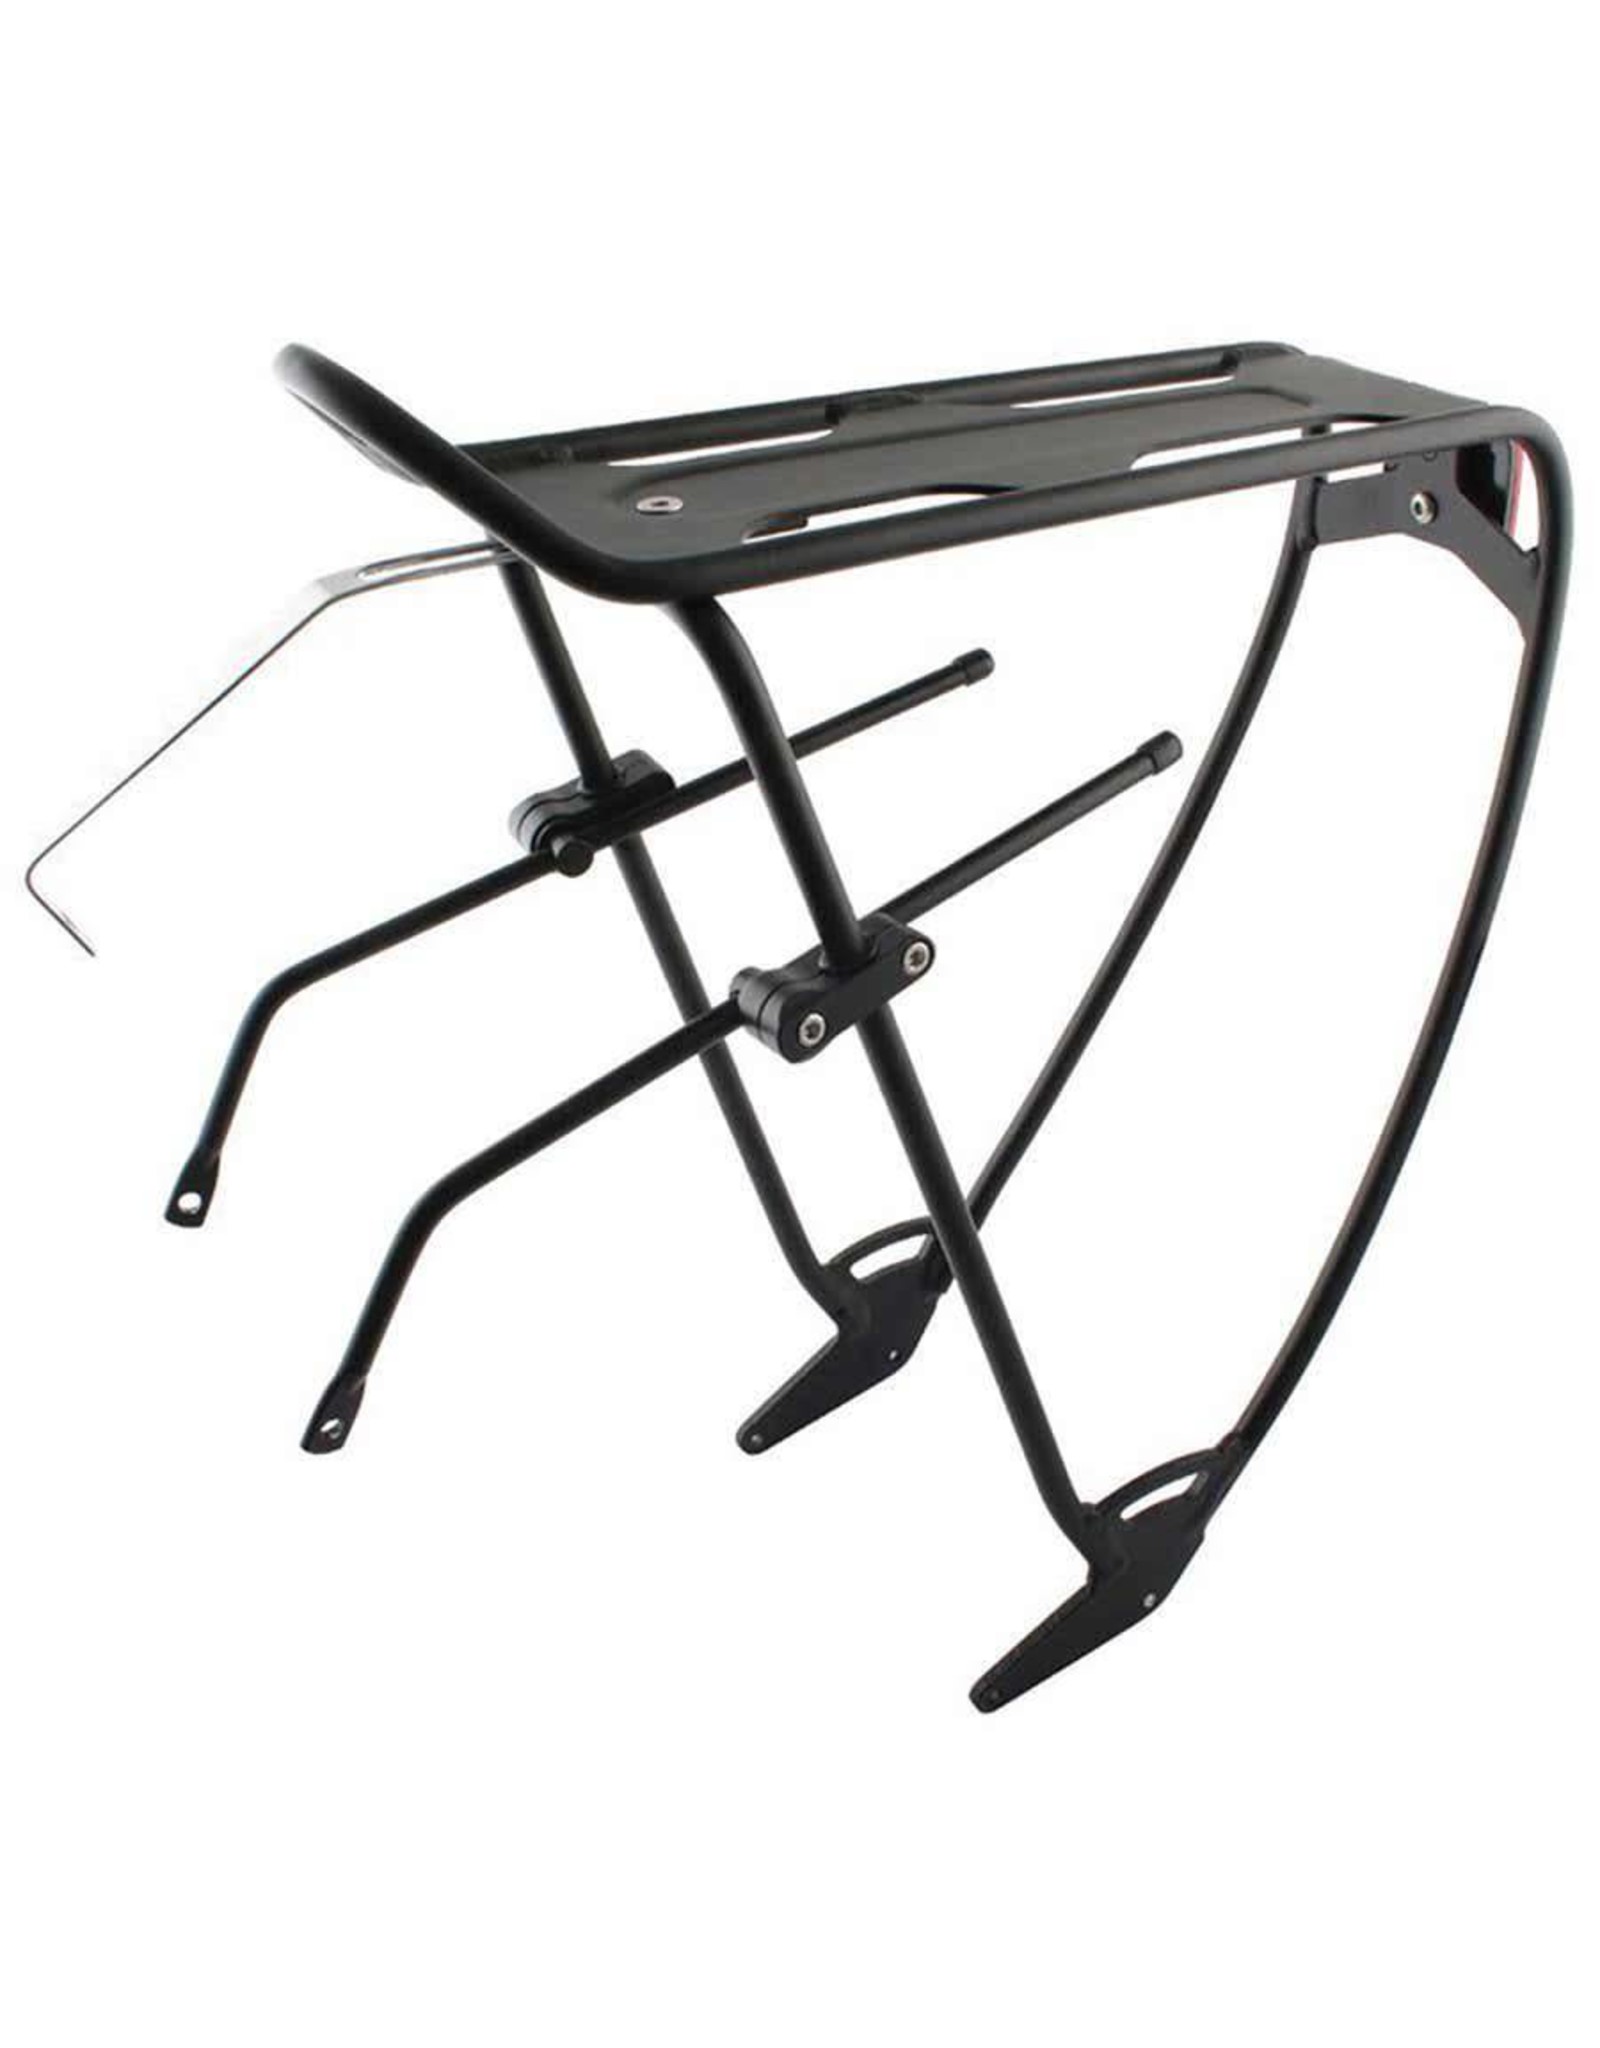 EVO Robin, Rear rack, With tray, Adjustable slide, Black